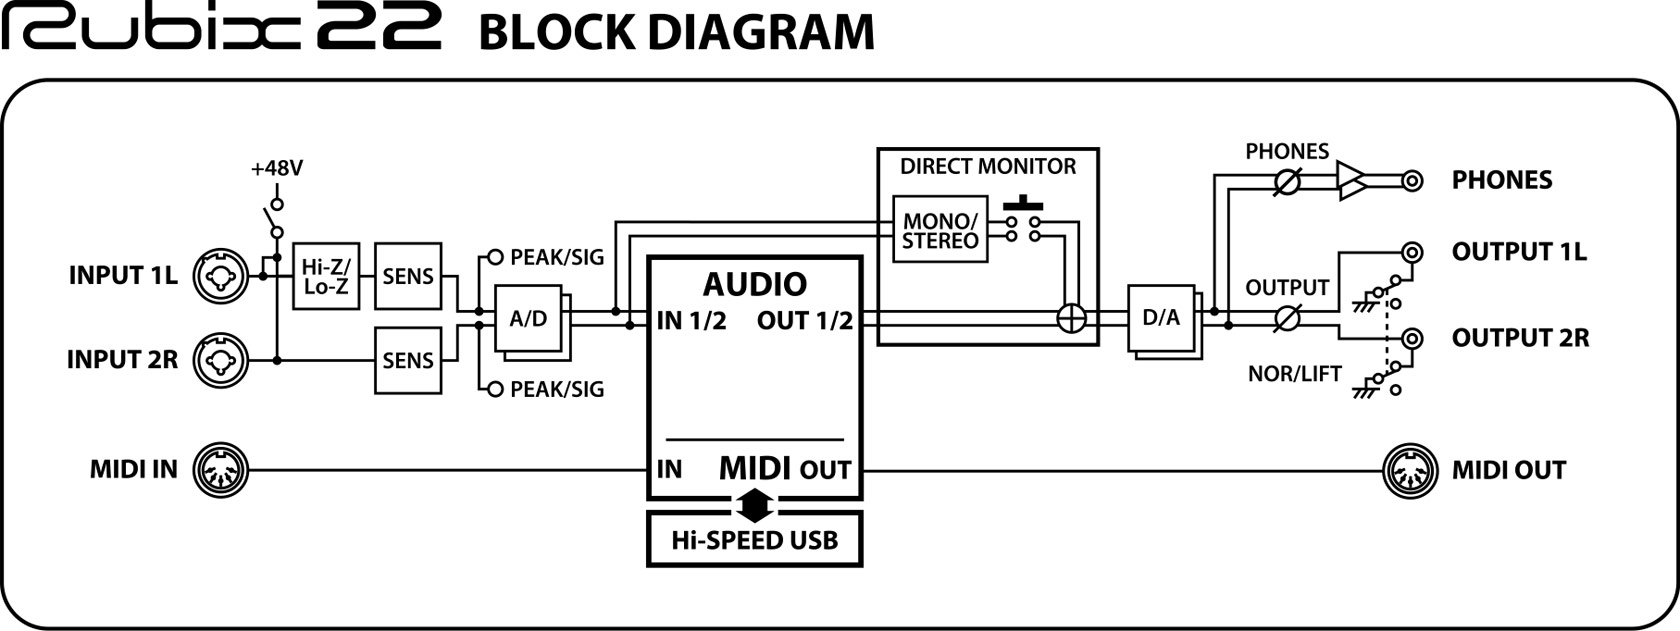 Roland   Rubix   USB Audio Interface